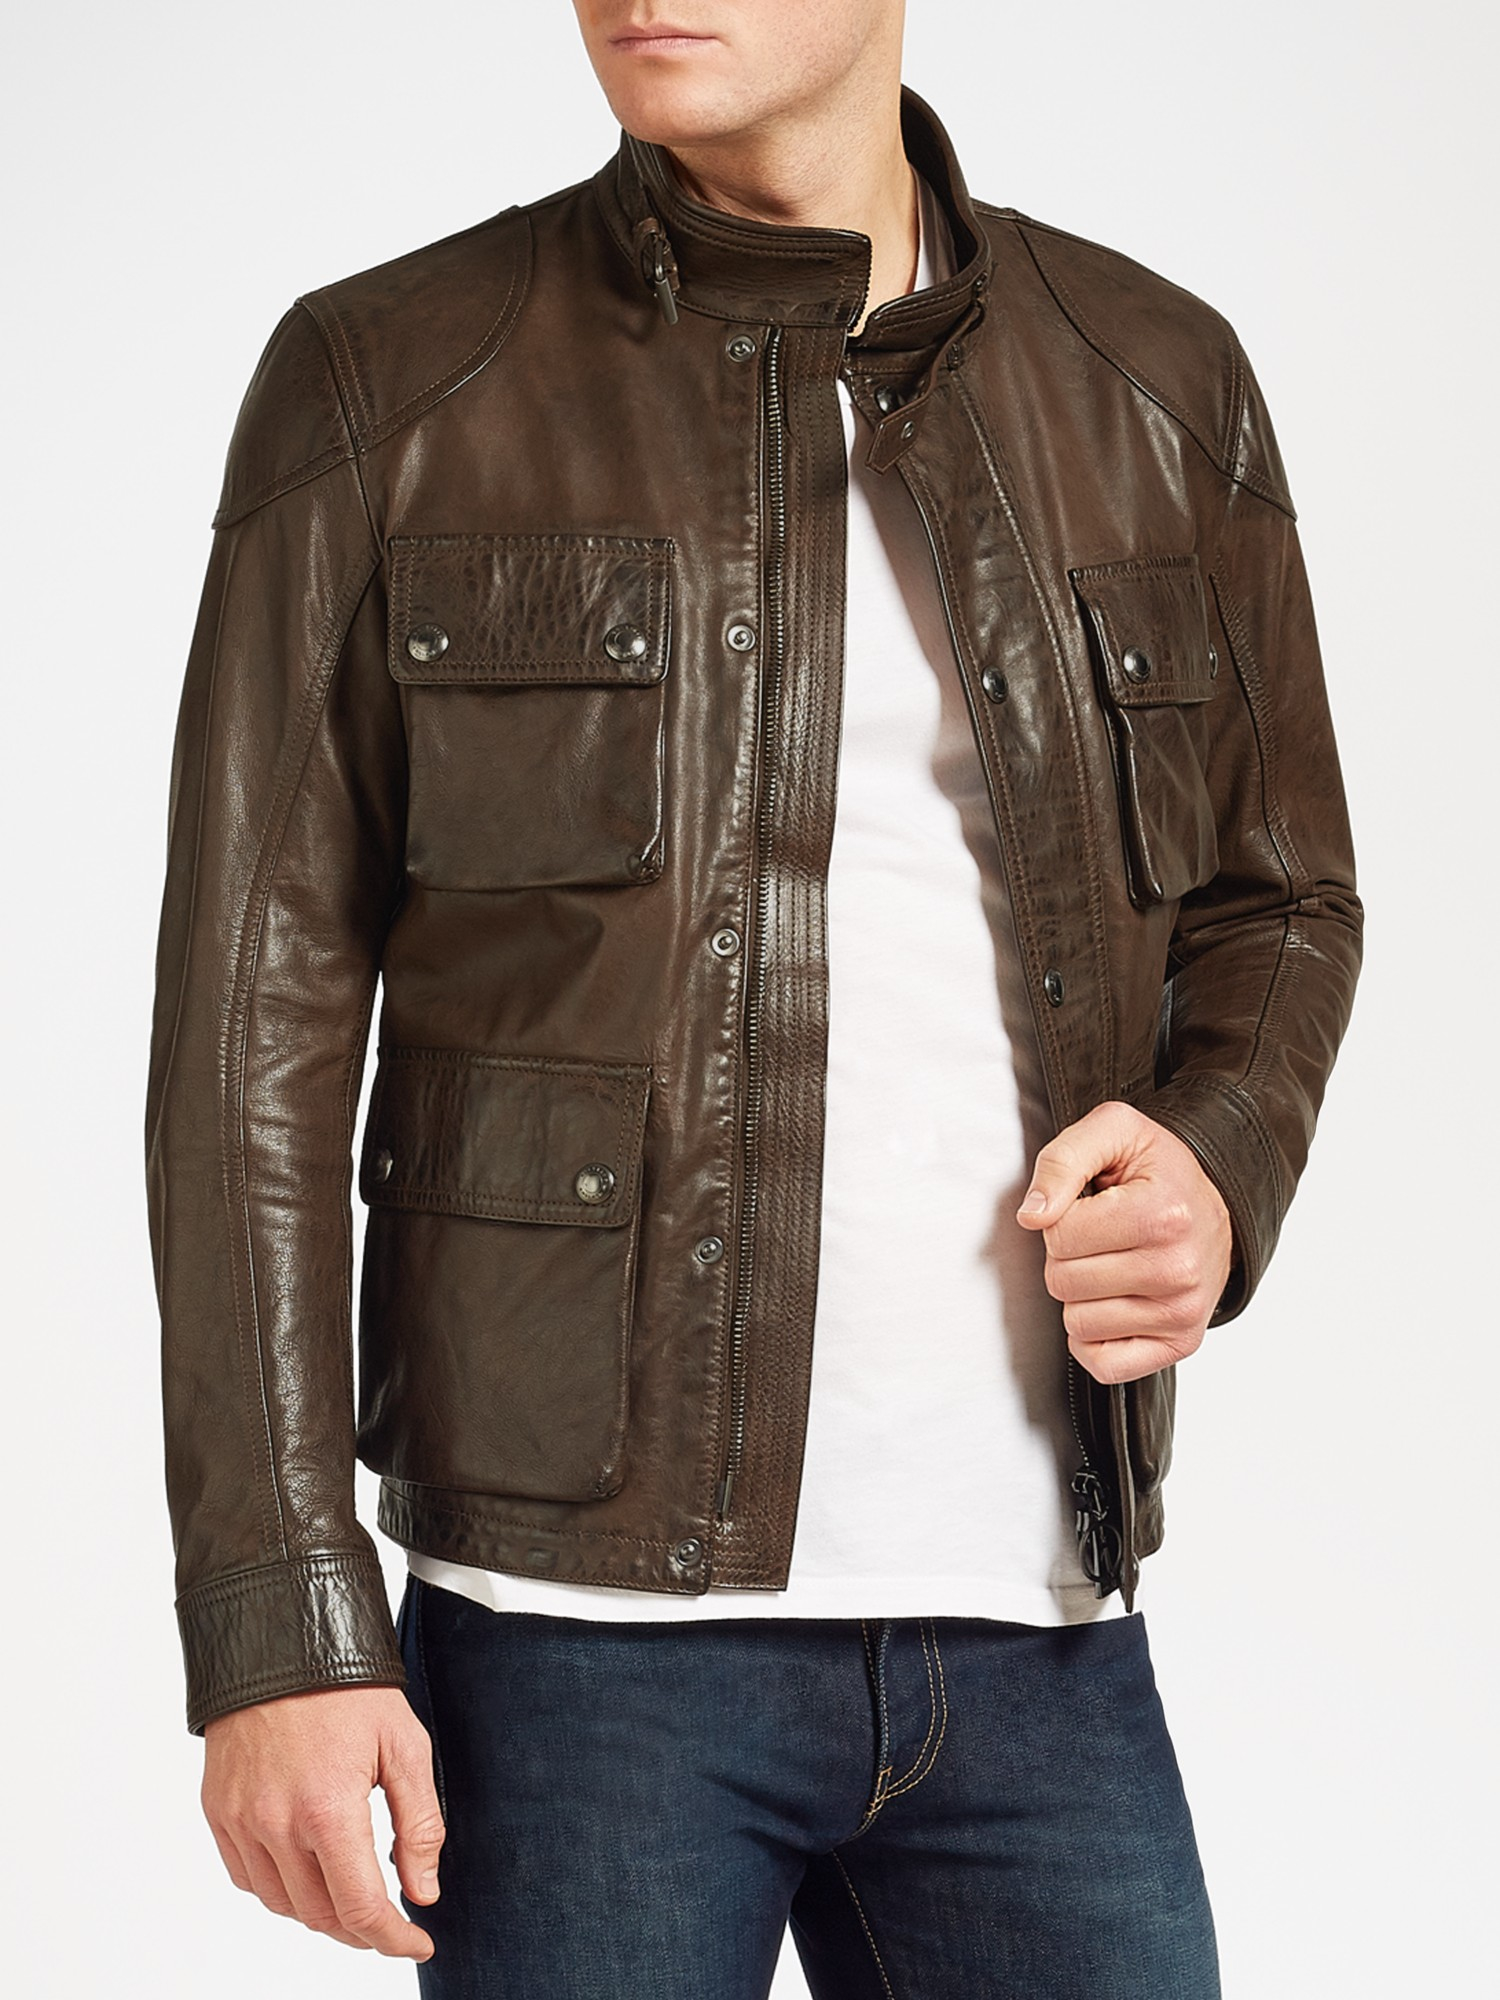 Belstaff Burgess Leather Blouson Jacket in Brown for Men - Lyst